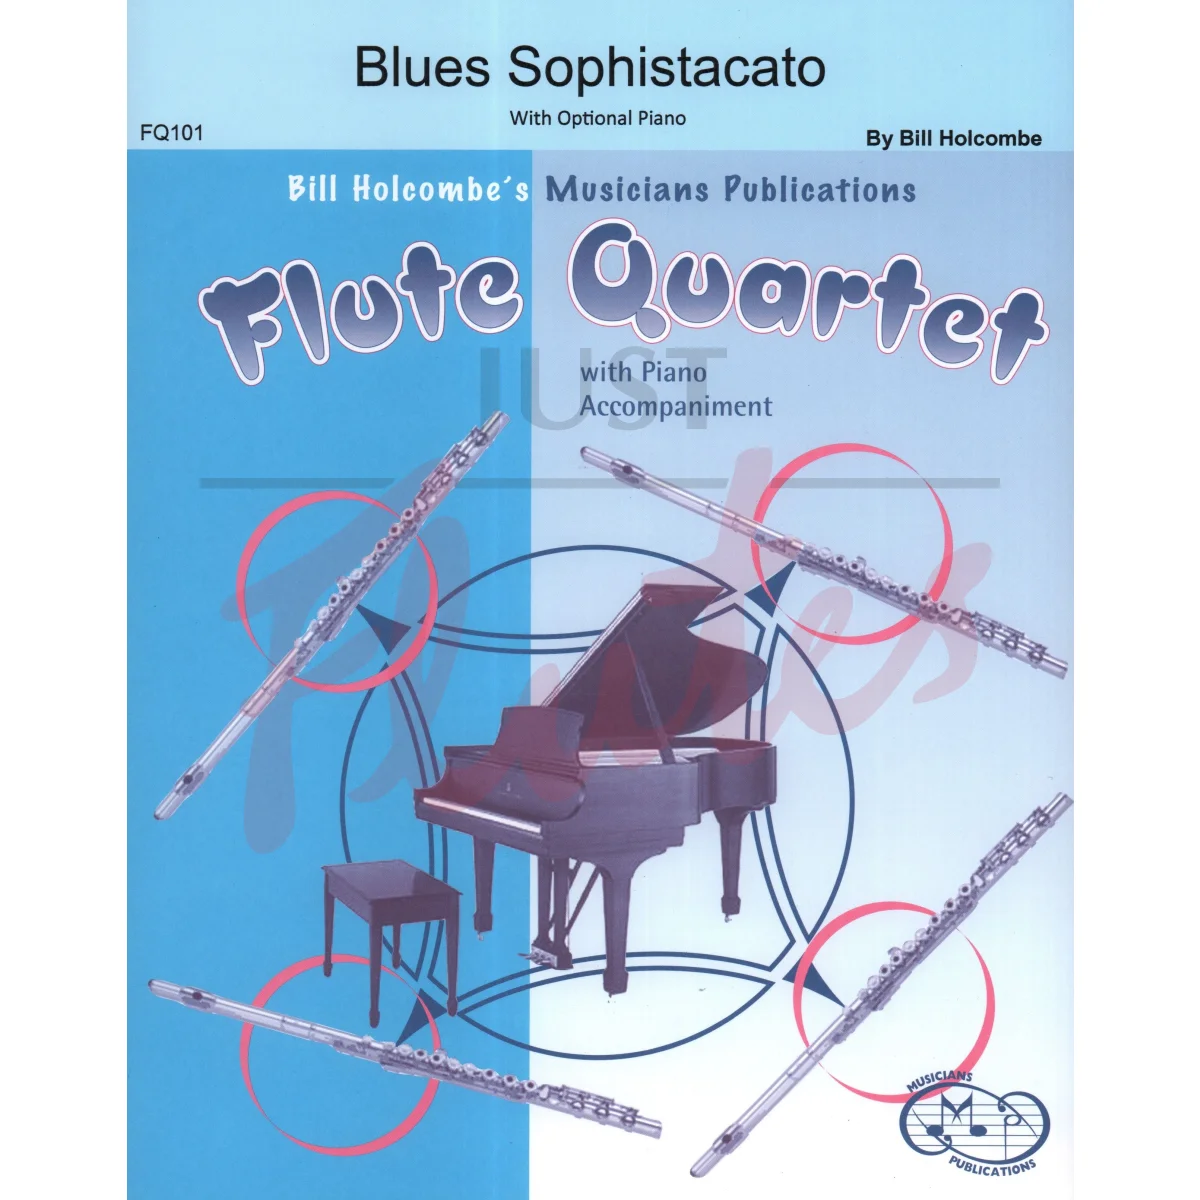 Blues Sophisticato for Flute Quartet and Piano